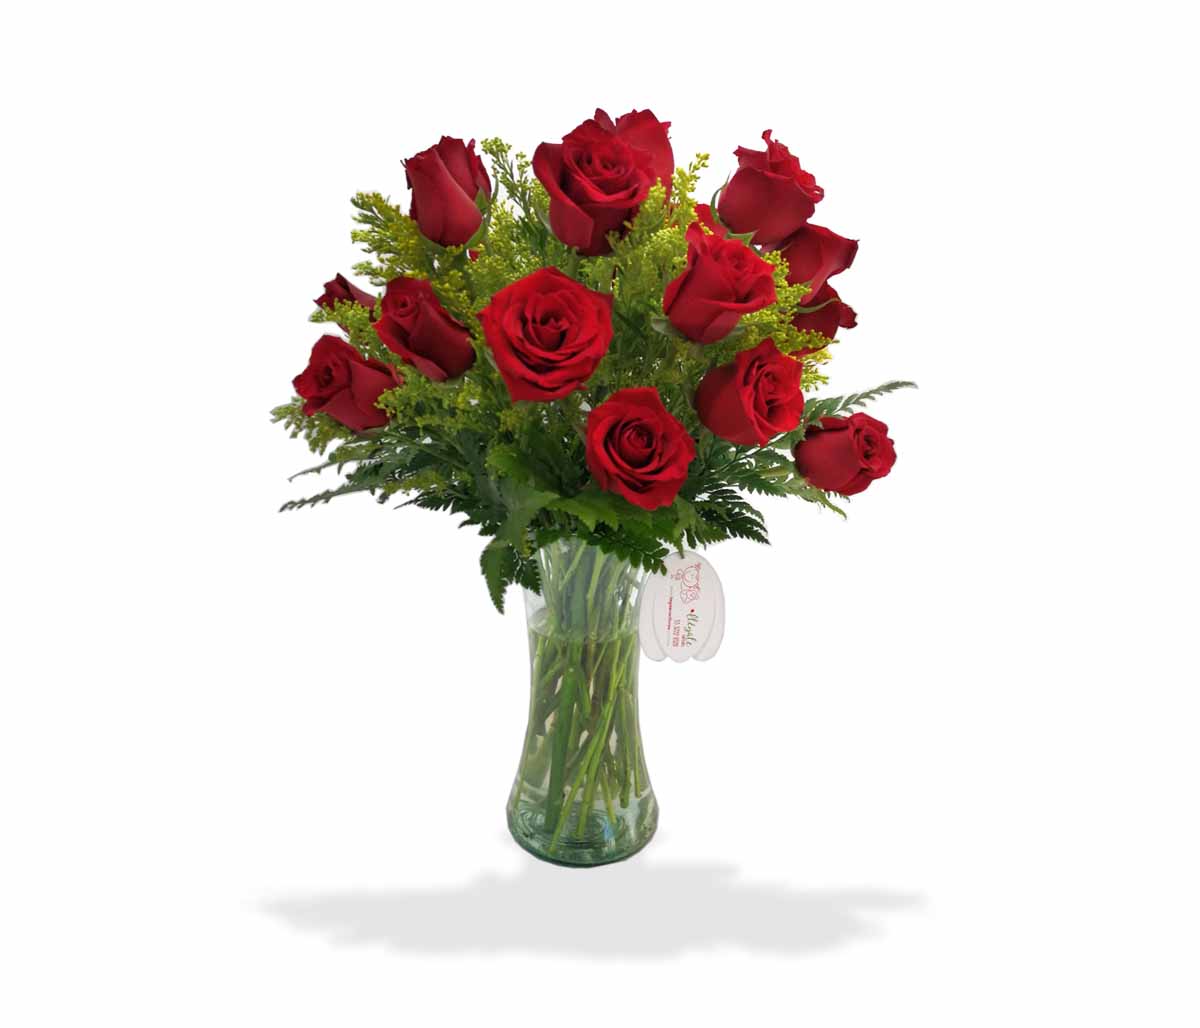 Bouquet con rosas rojas de llégale con flores